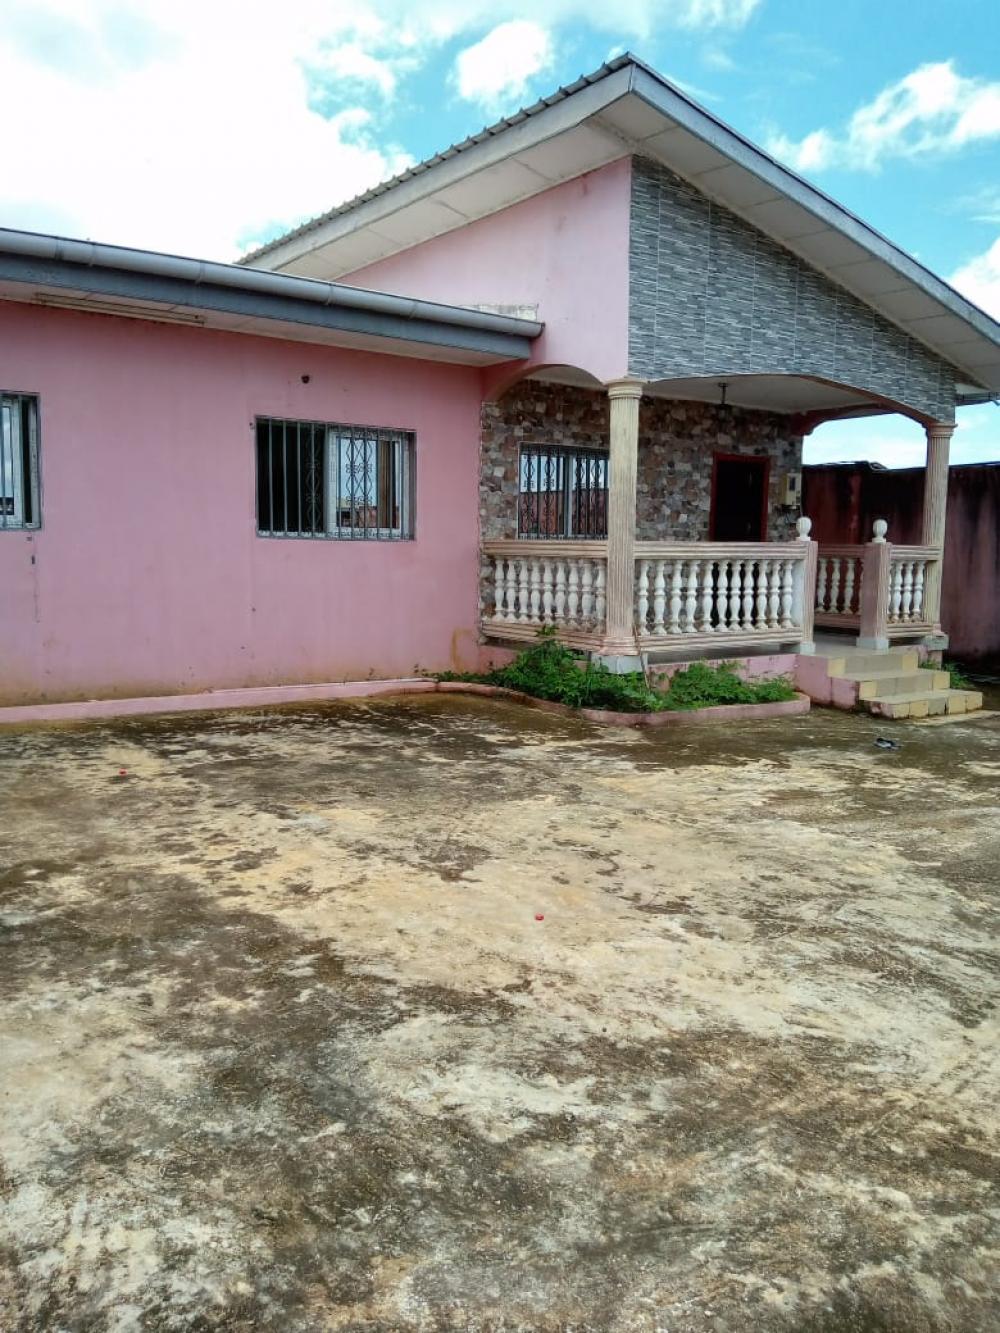 Villa 3 chambres à louer à Akanda, Angondjé. Prix: 350 000 FcfaPhoto Annonce Gabonhome 0